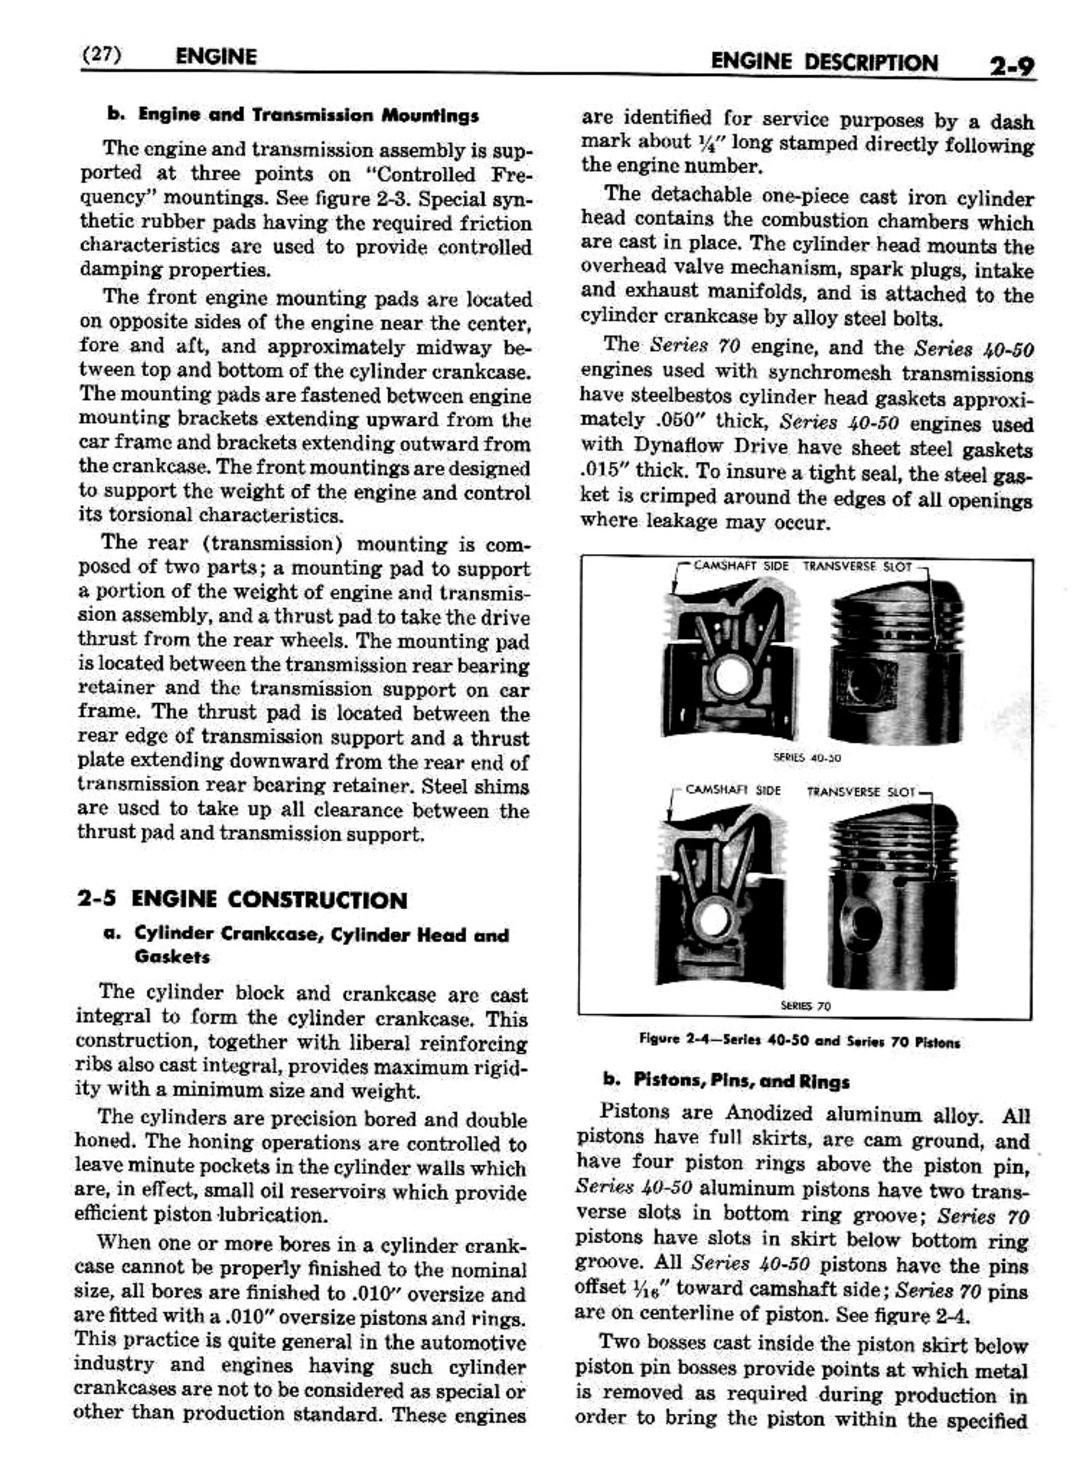 n_03 1951 Buick Shop Manual - Engine-009-009.jpg